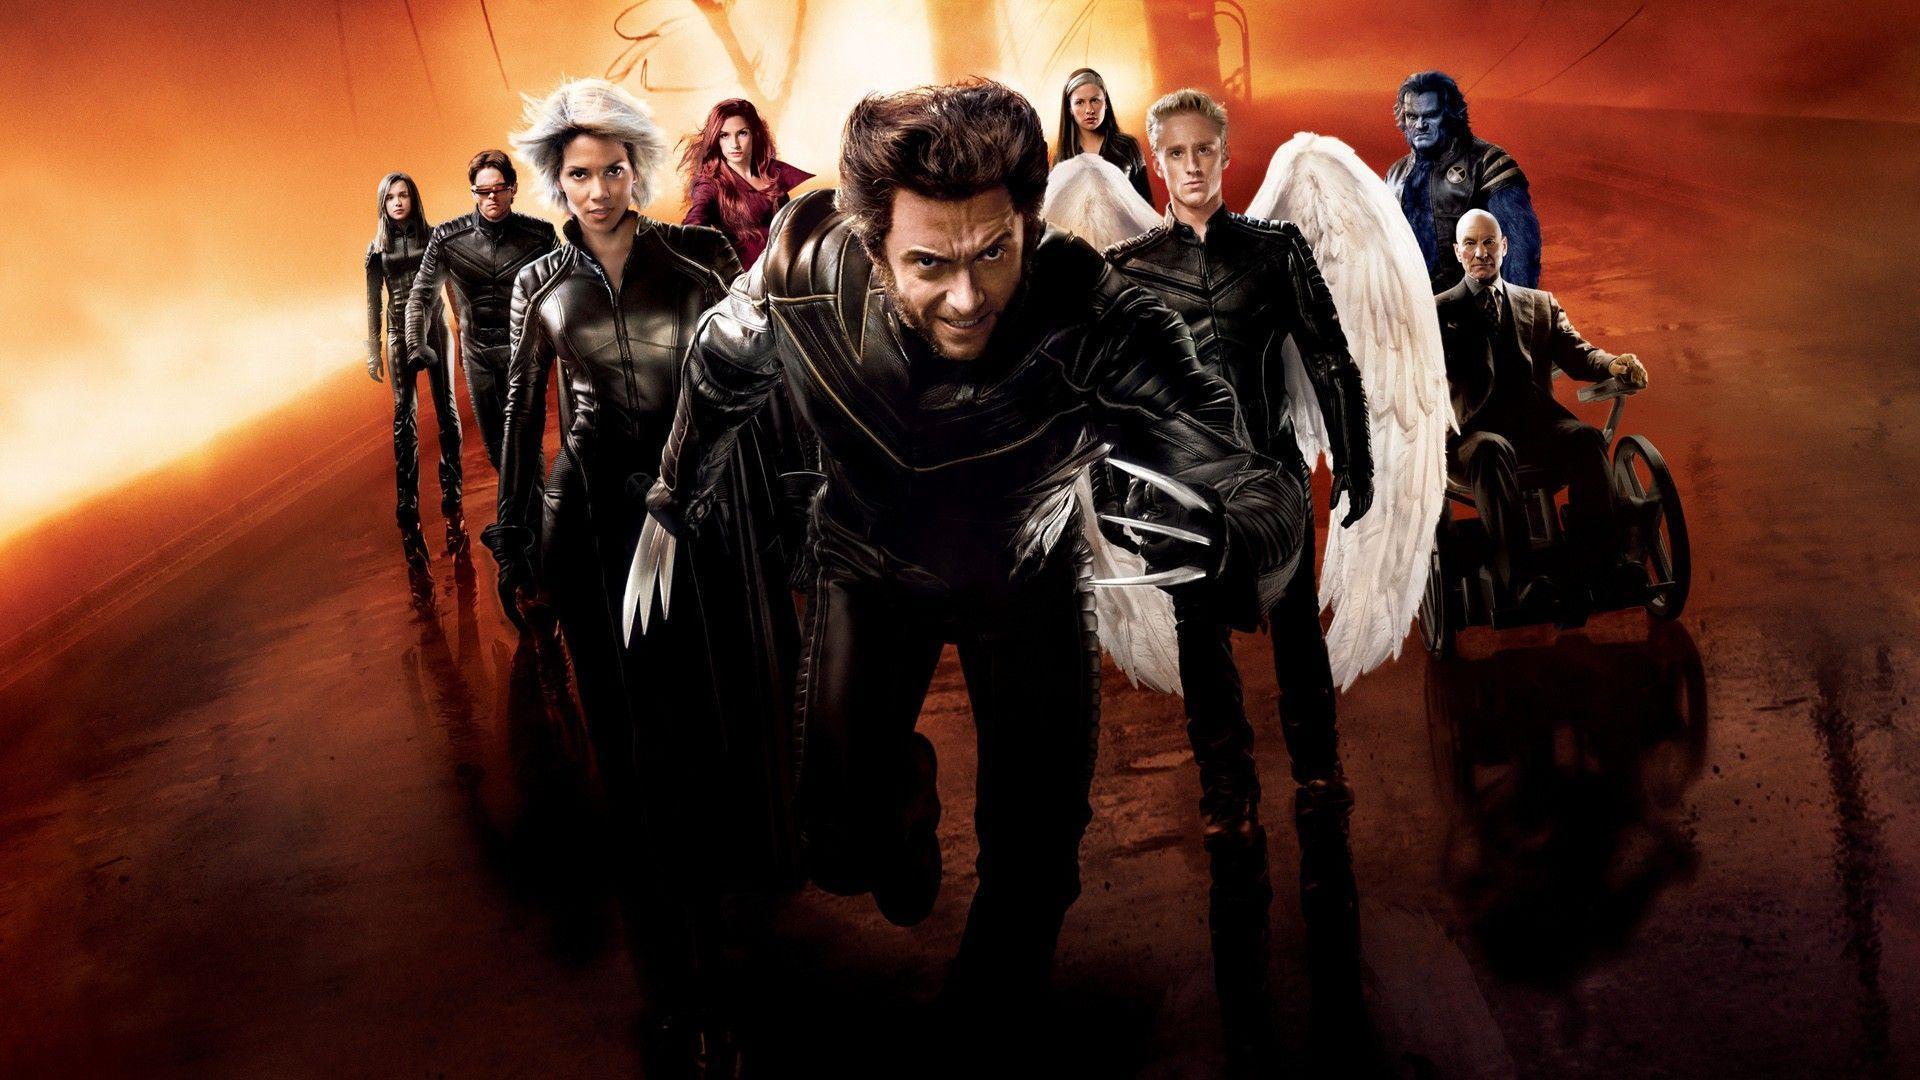 image For > X Men Dark Phoenix Movie